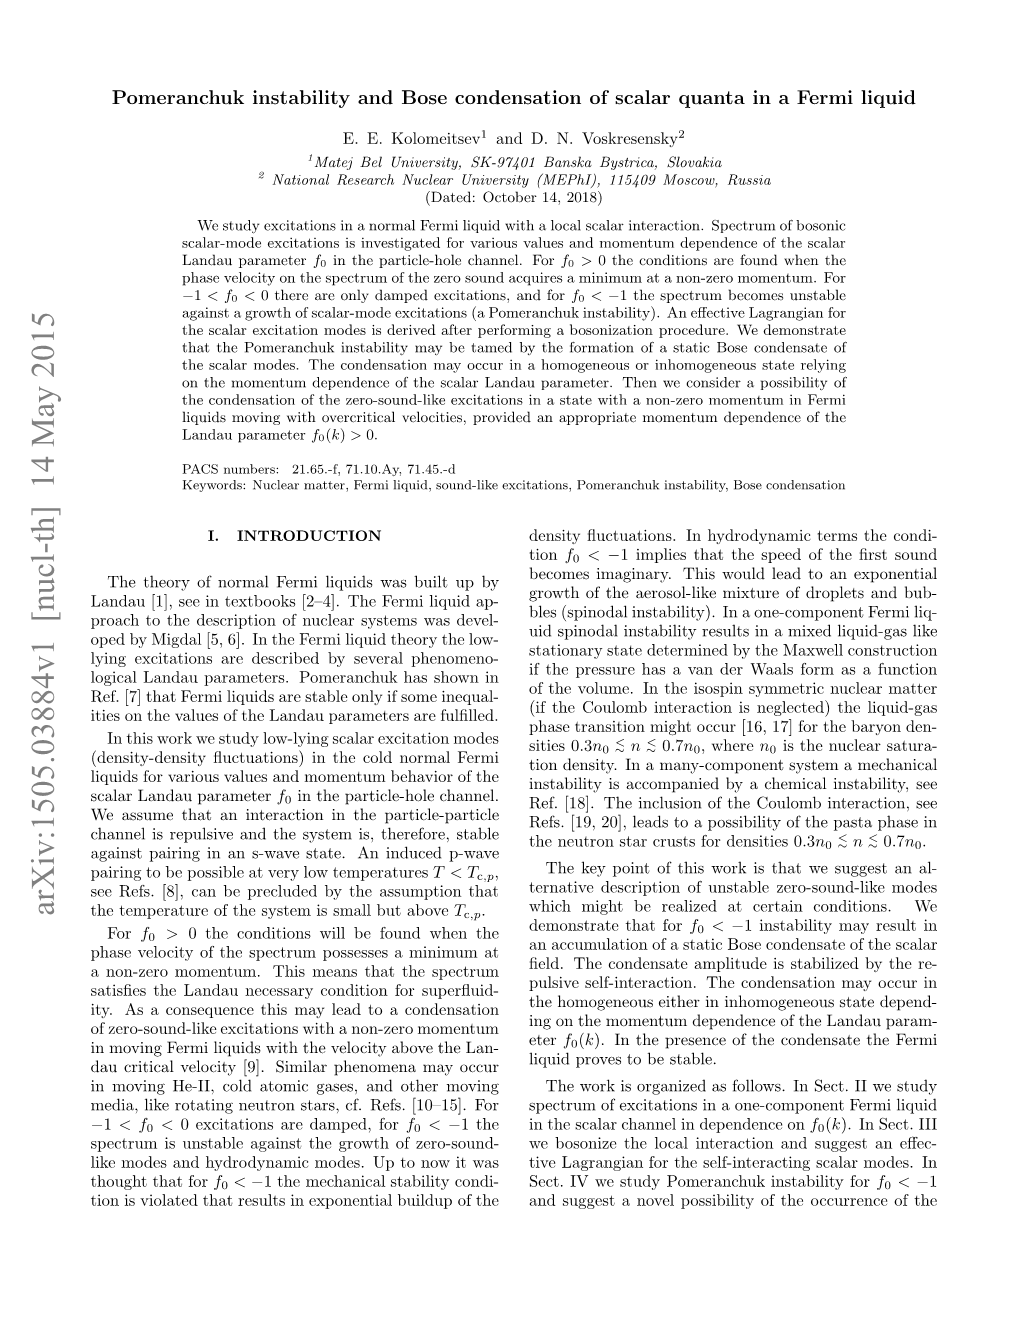 Pomeranchuk Instability and Bose Condensation of Scalar Quanta in A